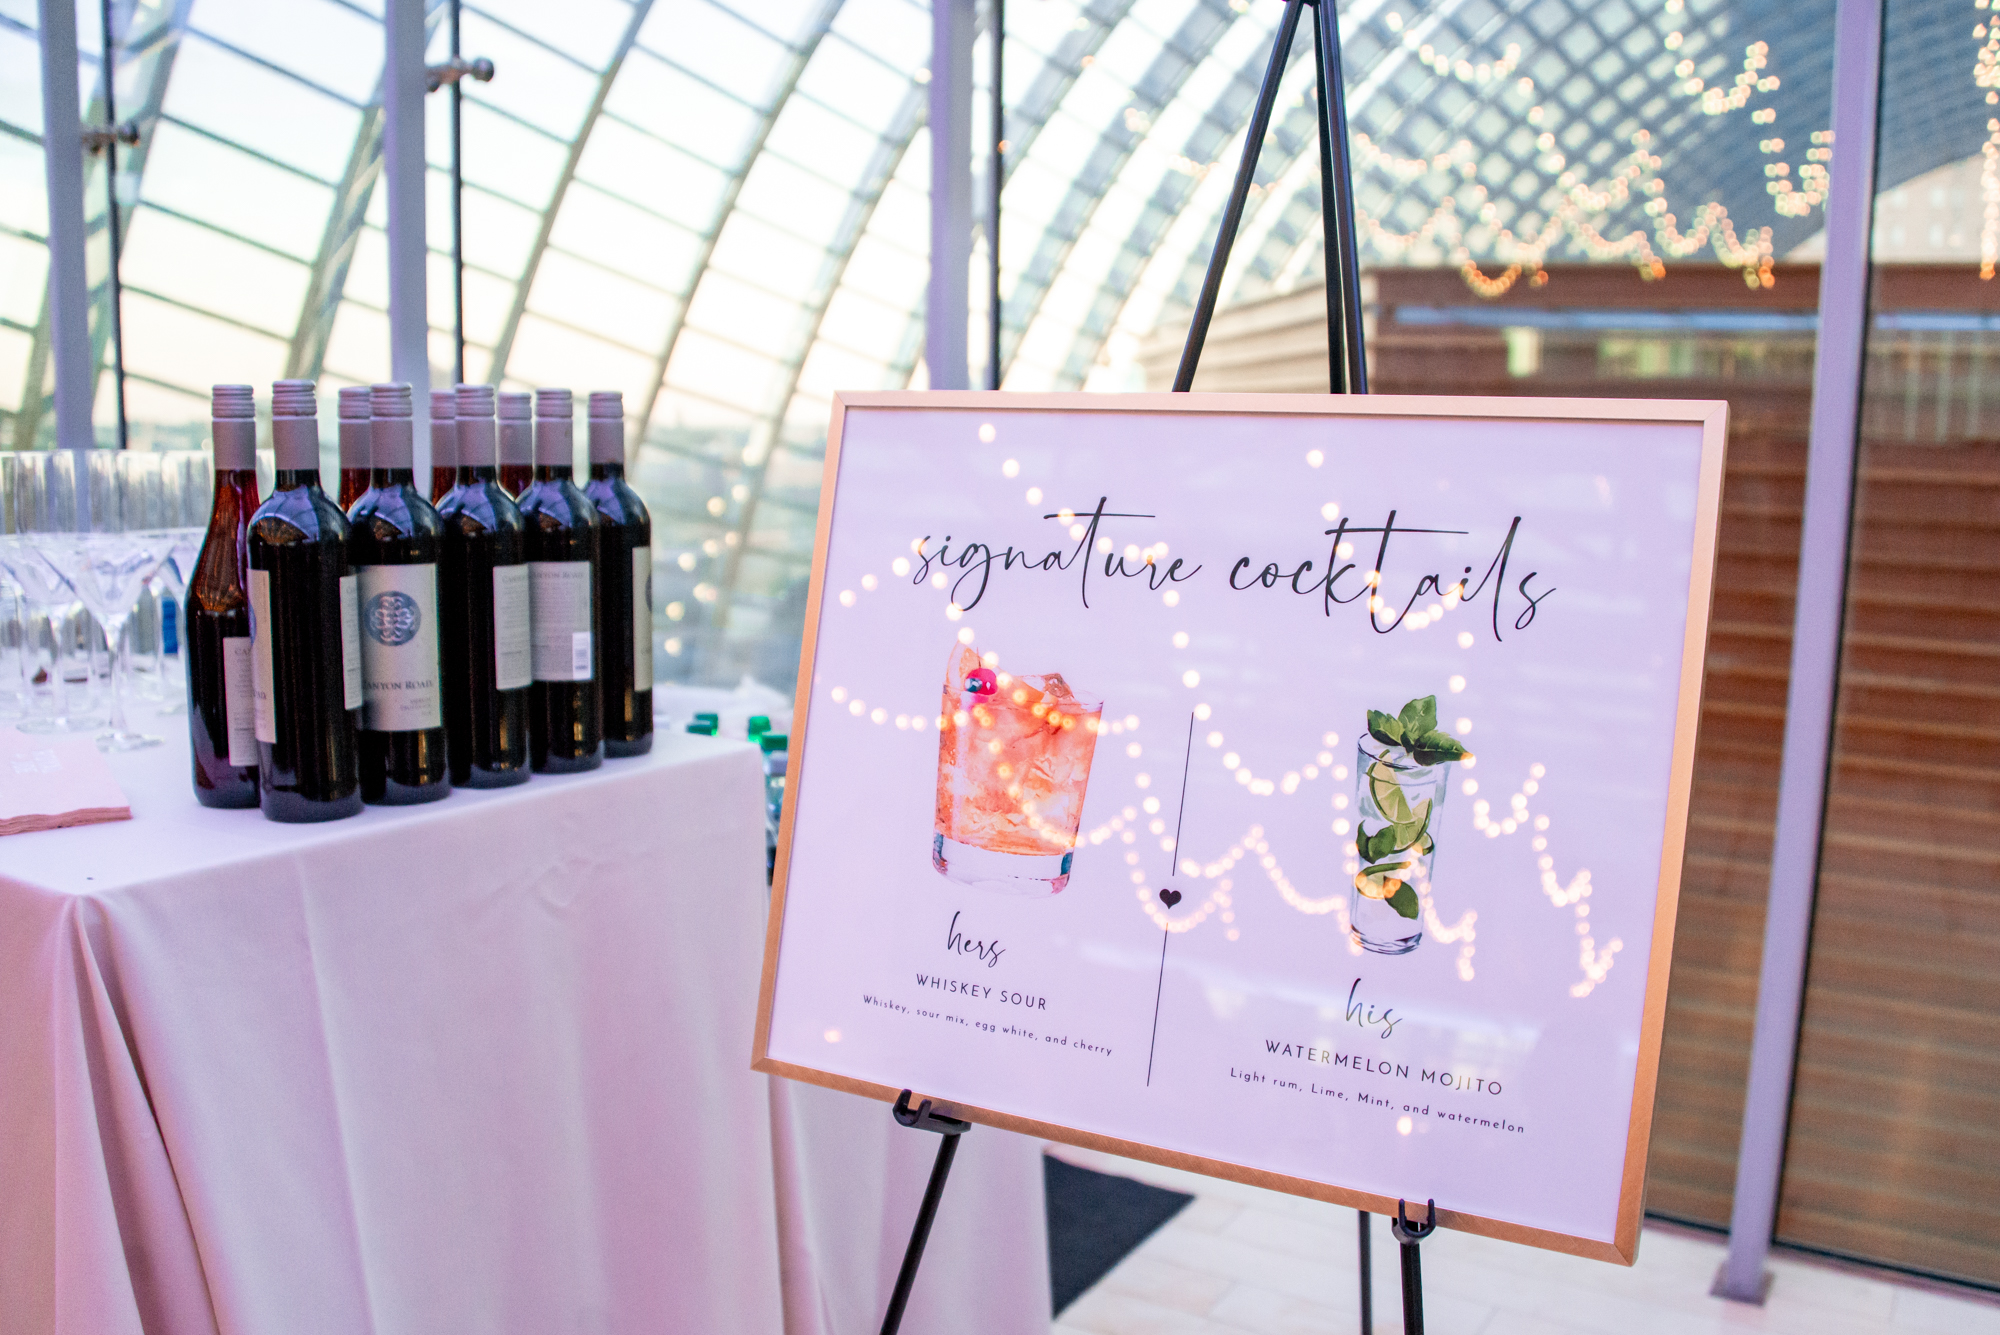 custom signature cocktail sign at a kimmel center wedding reception